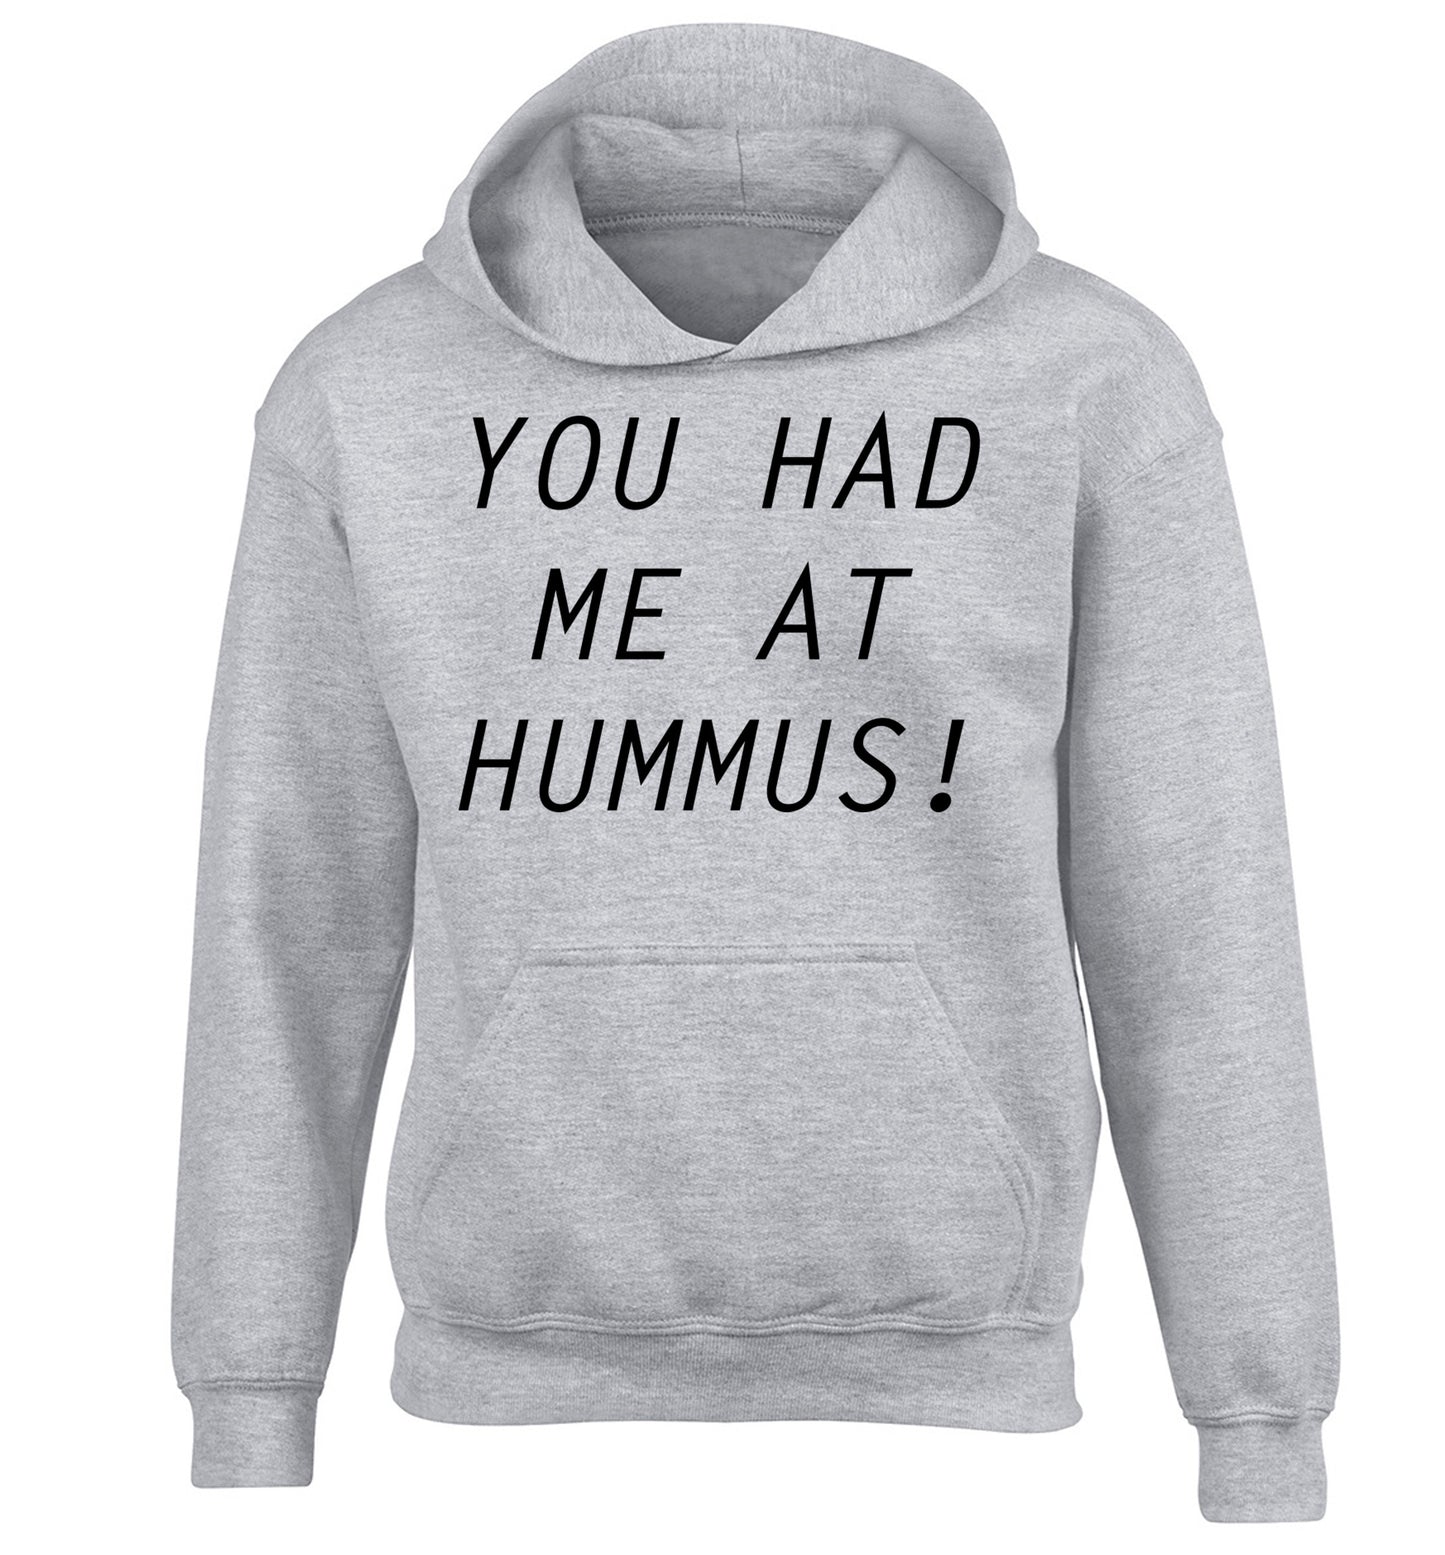 You had me at hummus children's grey hoodie 12-14 Years